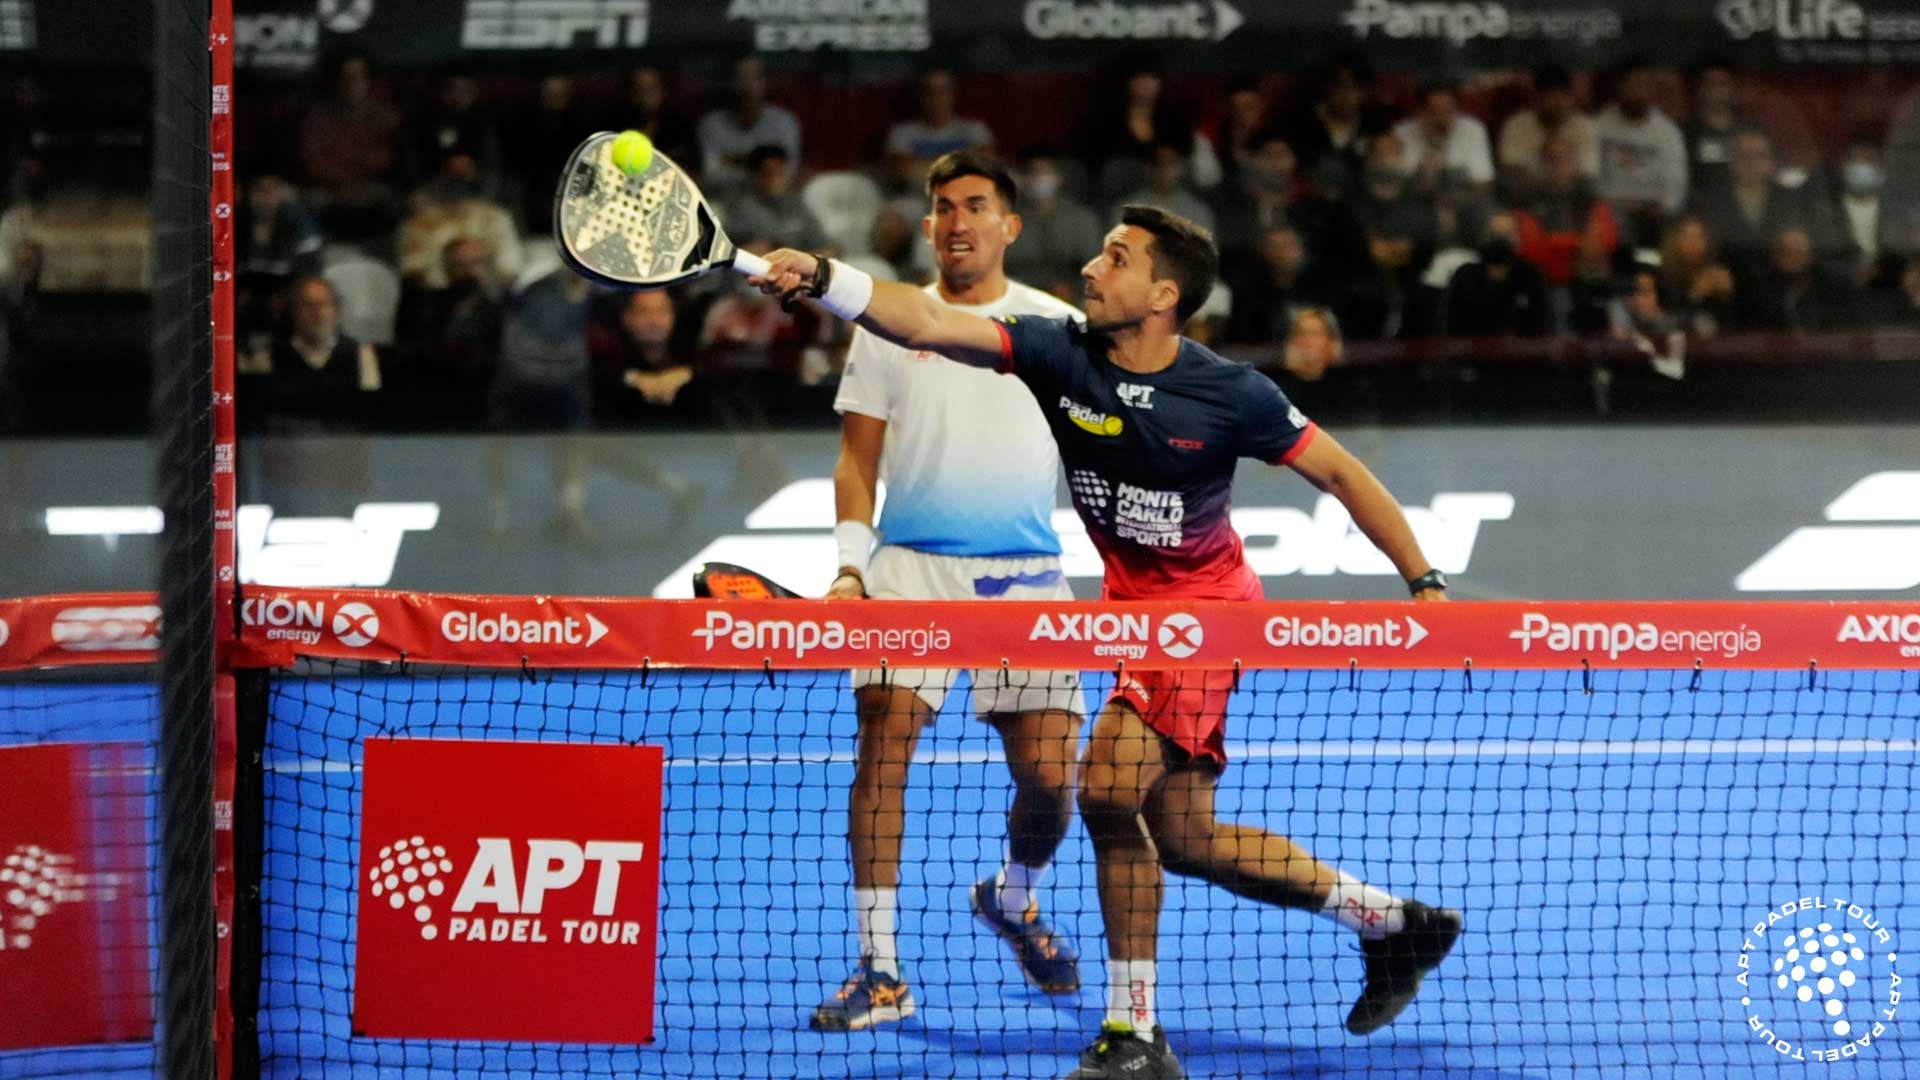 APT Buenos Aires Masters: Halbfinale in Form von Revanche